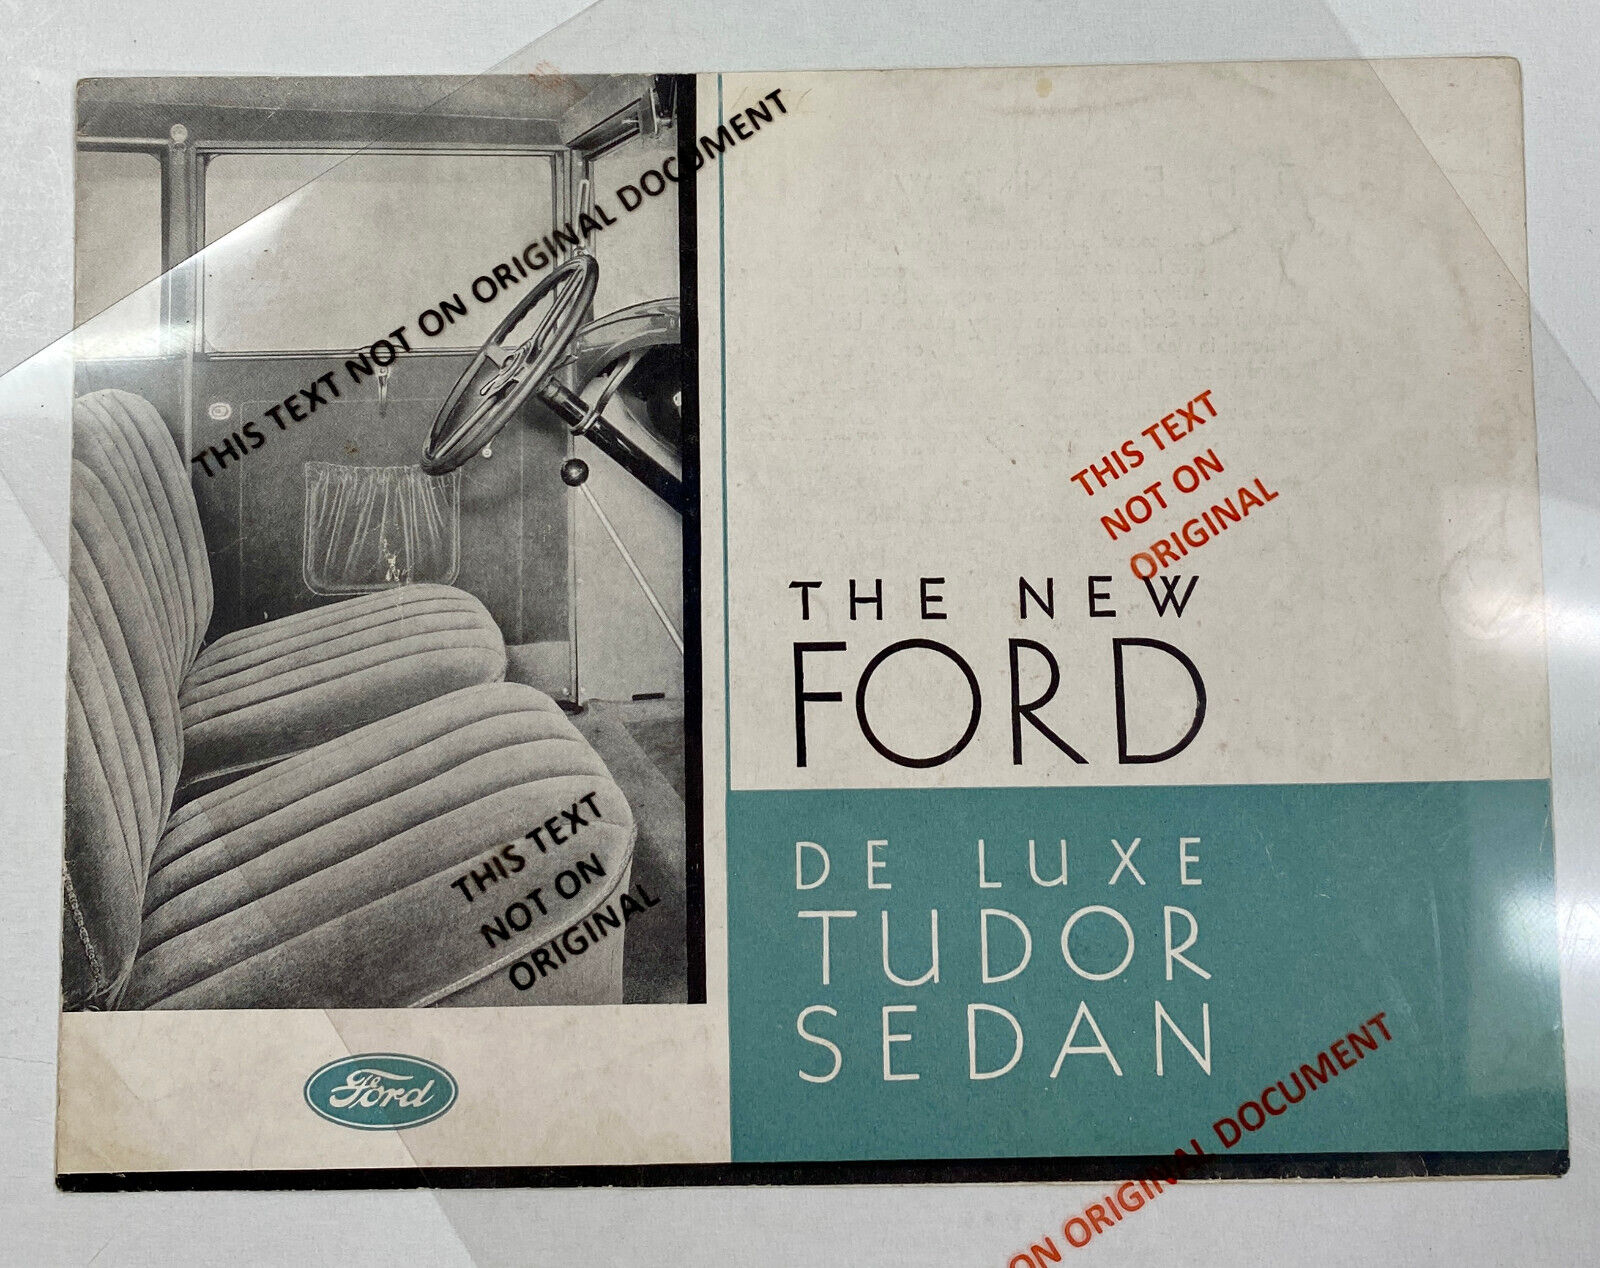 Original 1931 Ford Brochure - The New Ford De Luxe Tudor Sedan Form 81